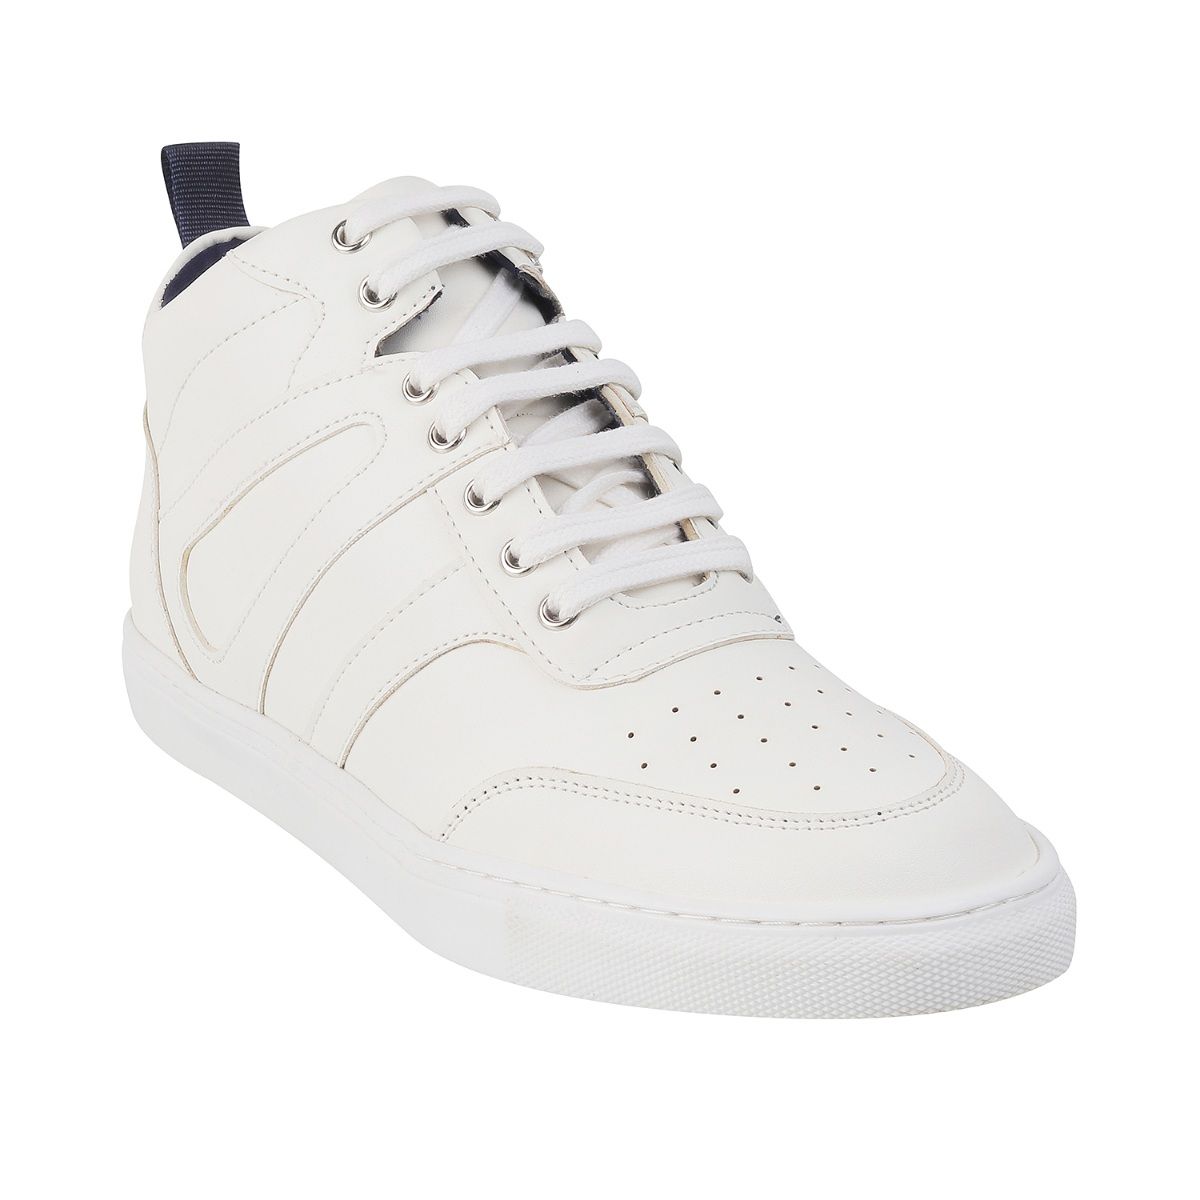 Buy Men White Casual Sneakers Online | SKU: 71-9026-16-40-Metro Shoes